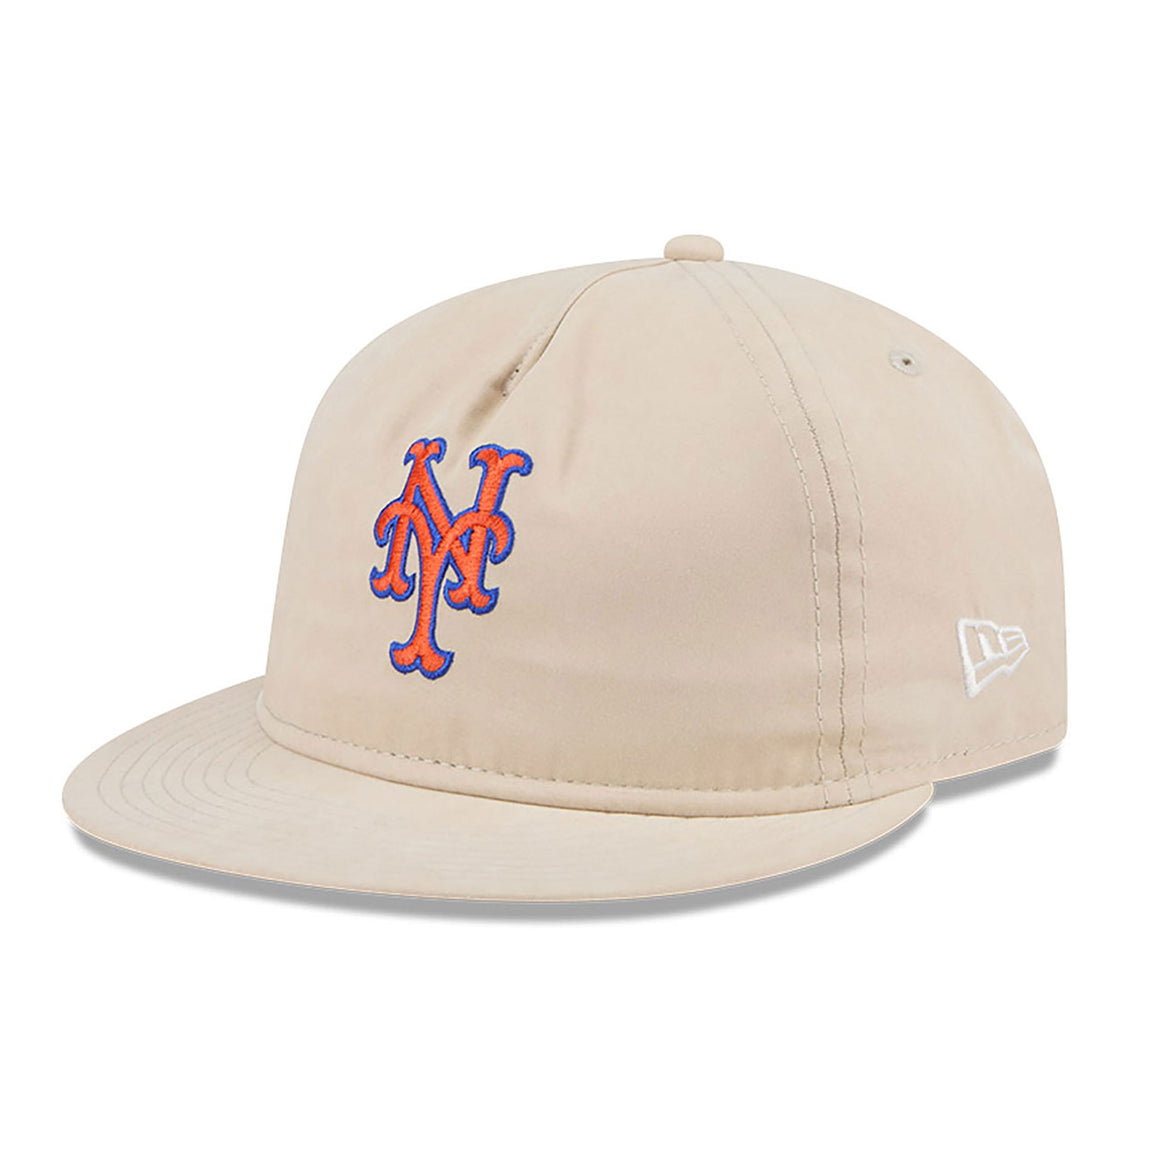 New Era 9FIFTY New York Mets Brushed Nylon Strapback Cap (Cream) - New Era 9FIFTY New York Mets Brushed Nylon Strapback Cap (Cream) - 